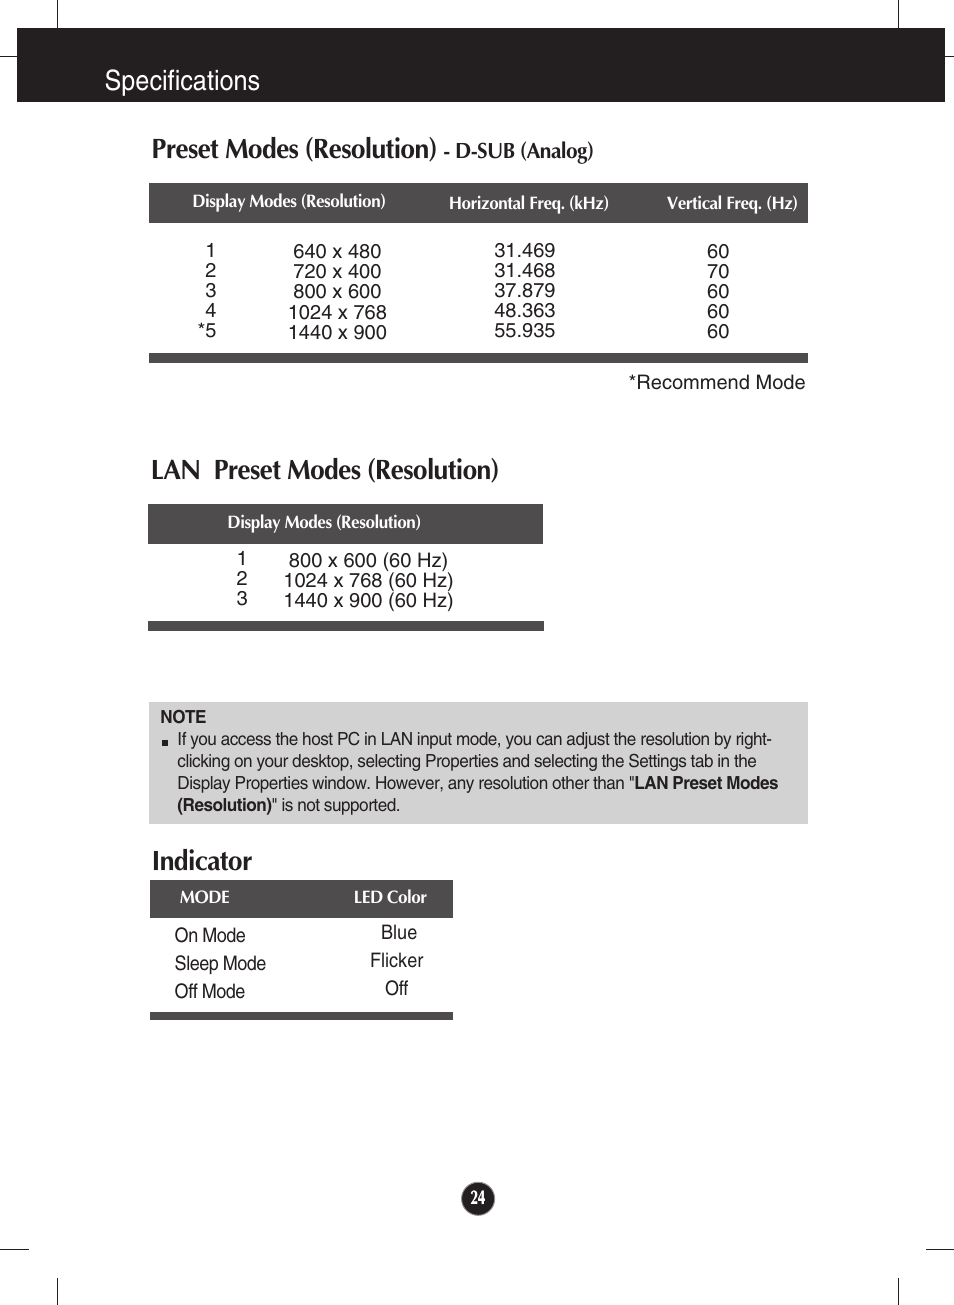 D-sub preset modes (resolution), Lan preset modes (resolution), Indicator | Specifications preset modes (resolution) | LG Network Monitor N194WA User Manual | Page 26 / 30